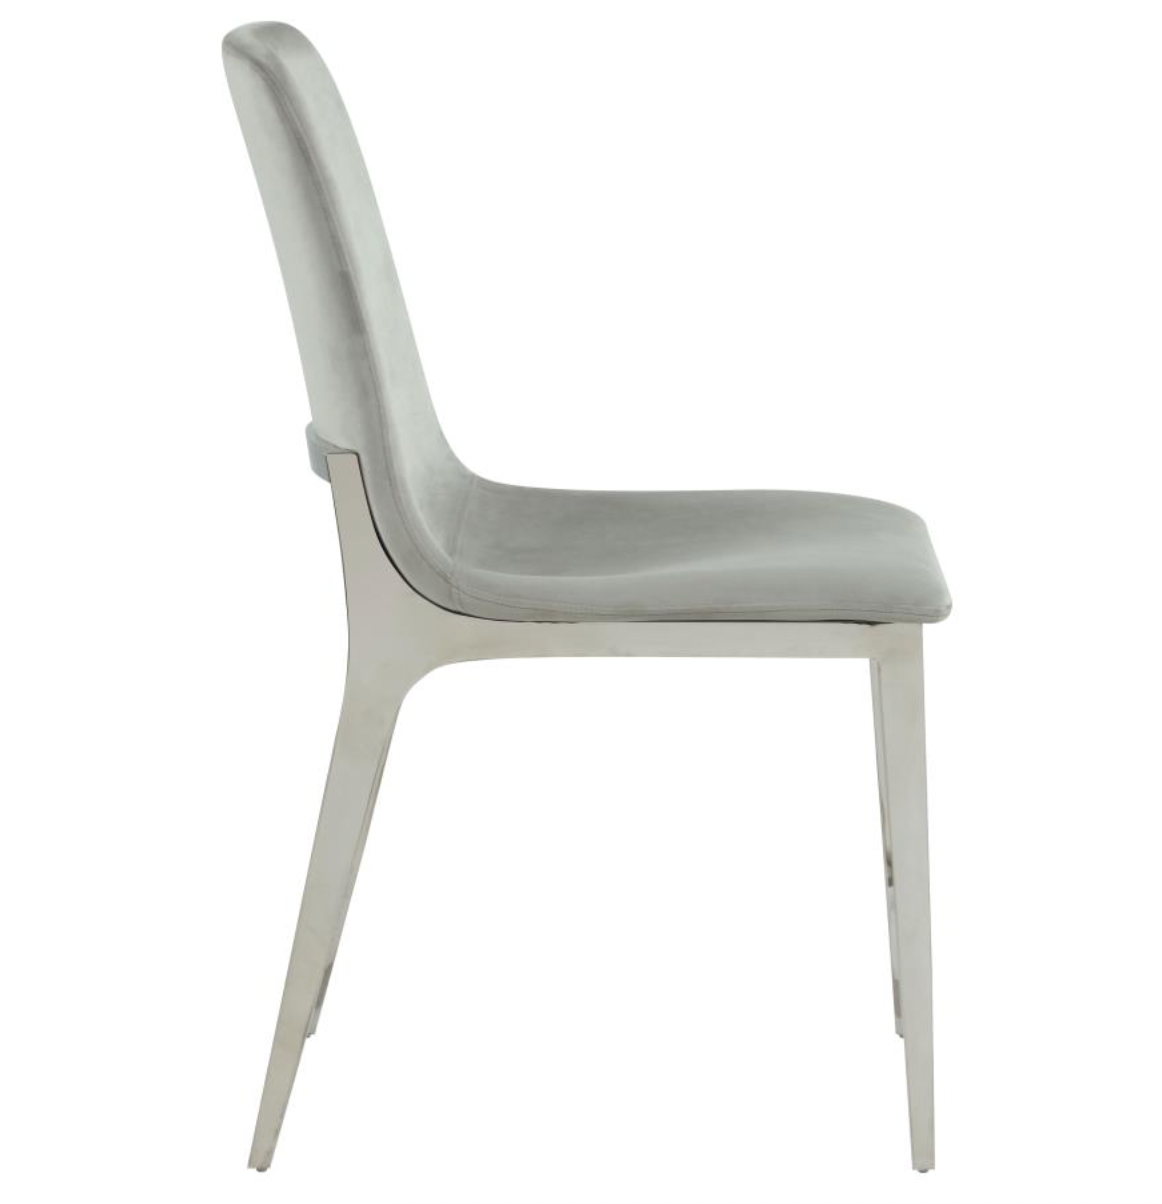 IRENE Upholstered Side Dining Chair